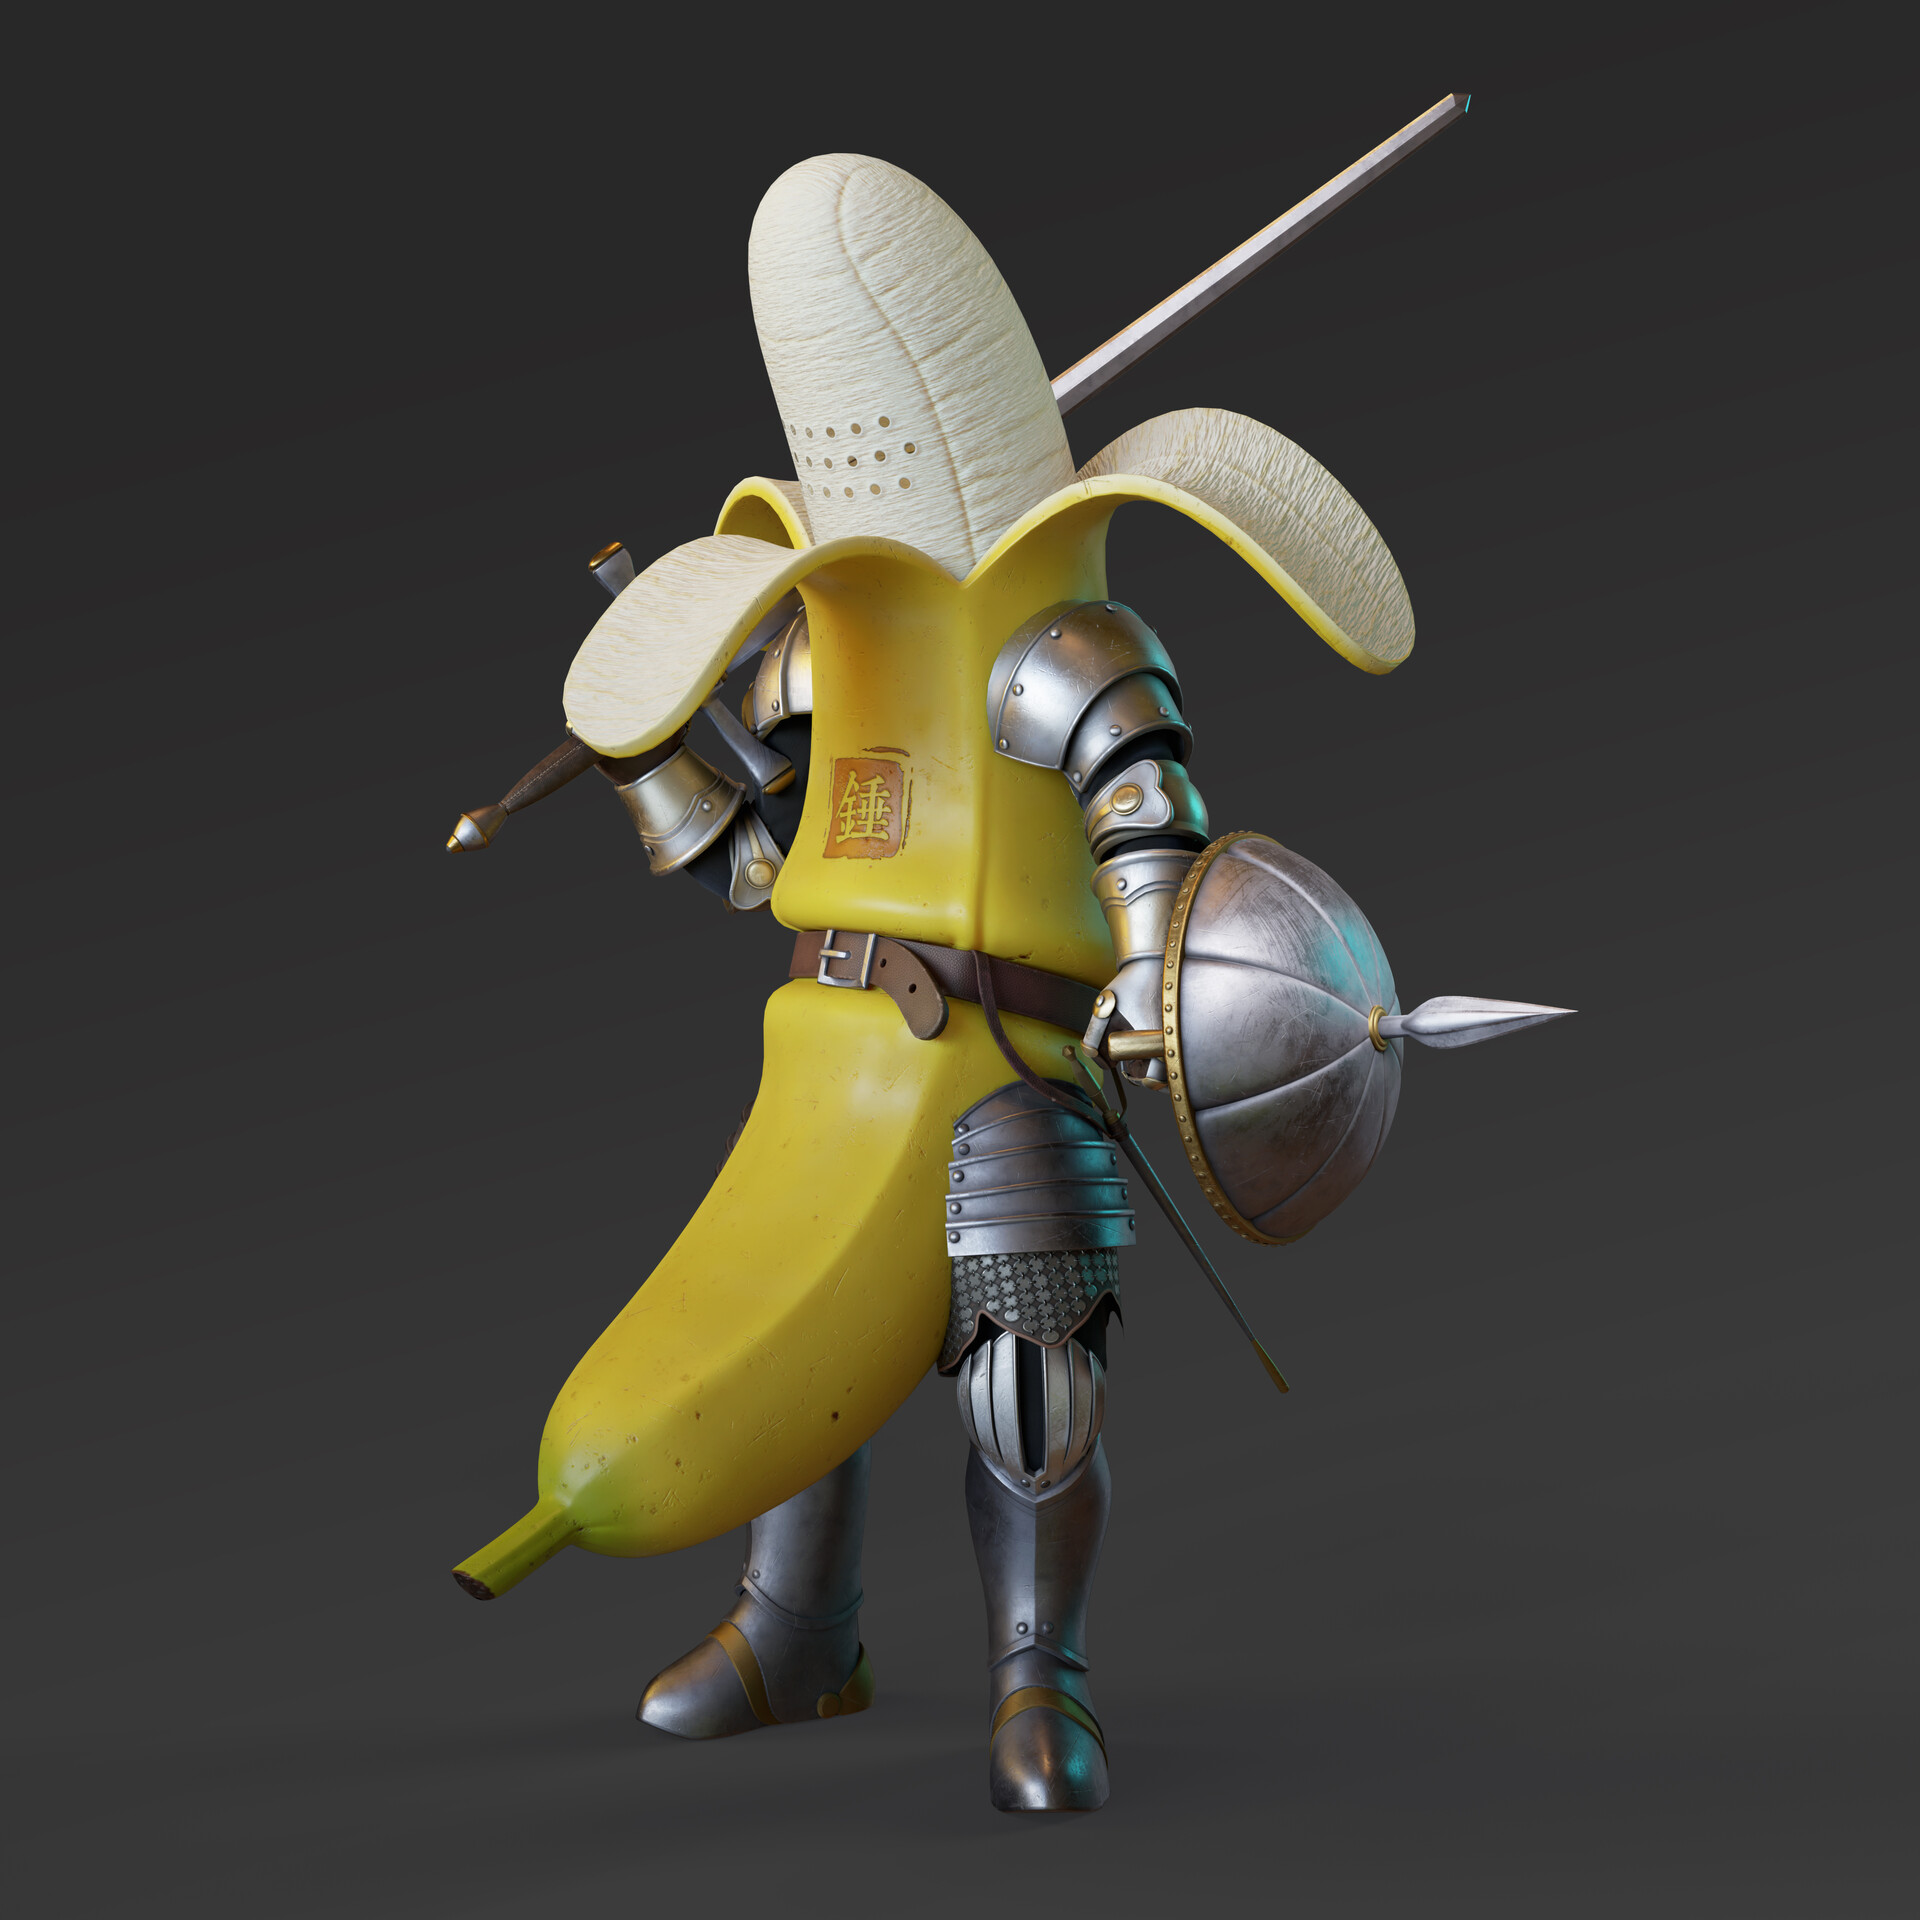 General 1920x1920 Ma Chui Chui CGI warrior knight bananas armor sword simple background portrait display minimalism digital art